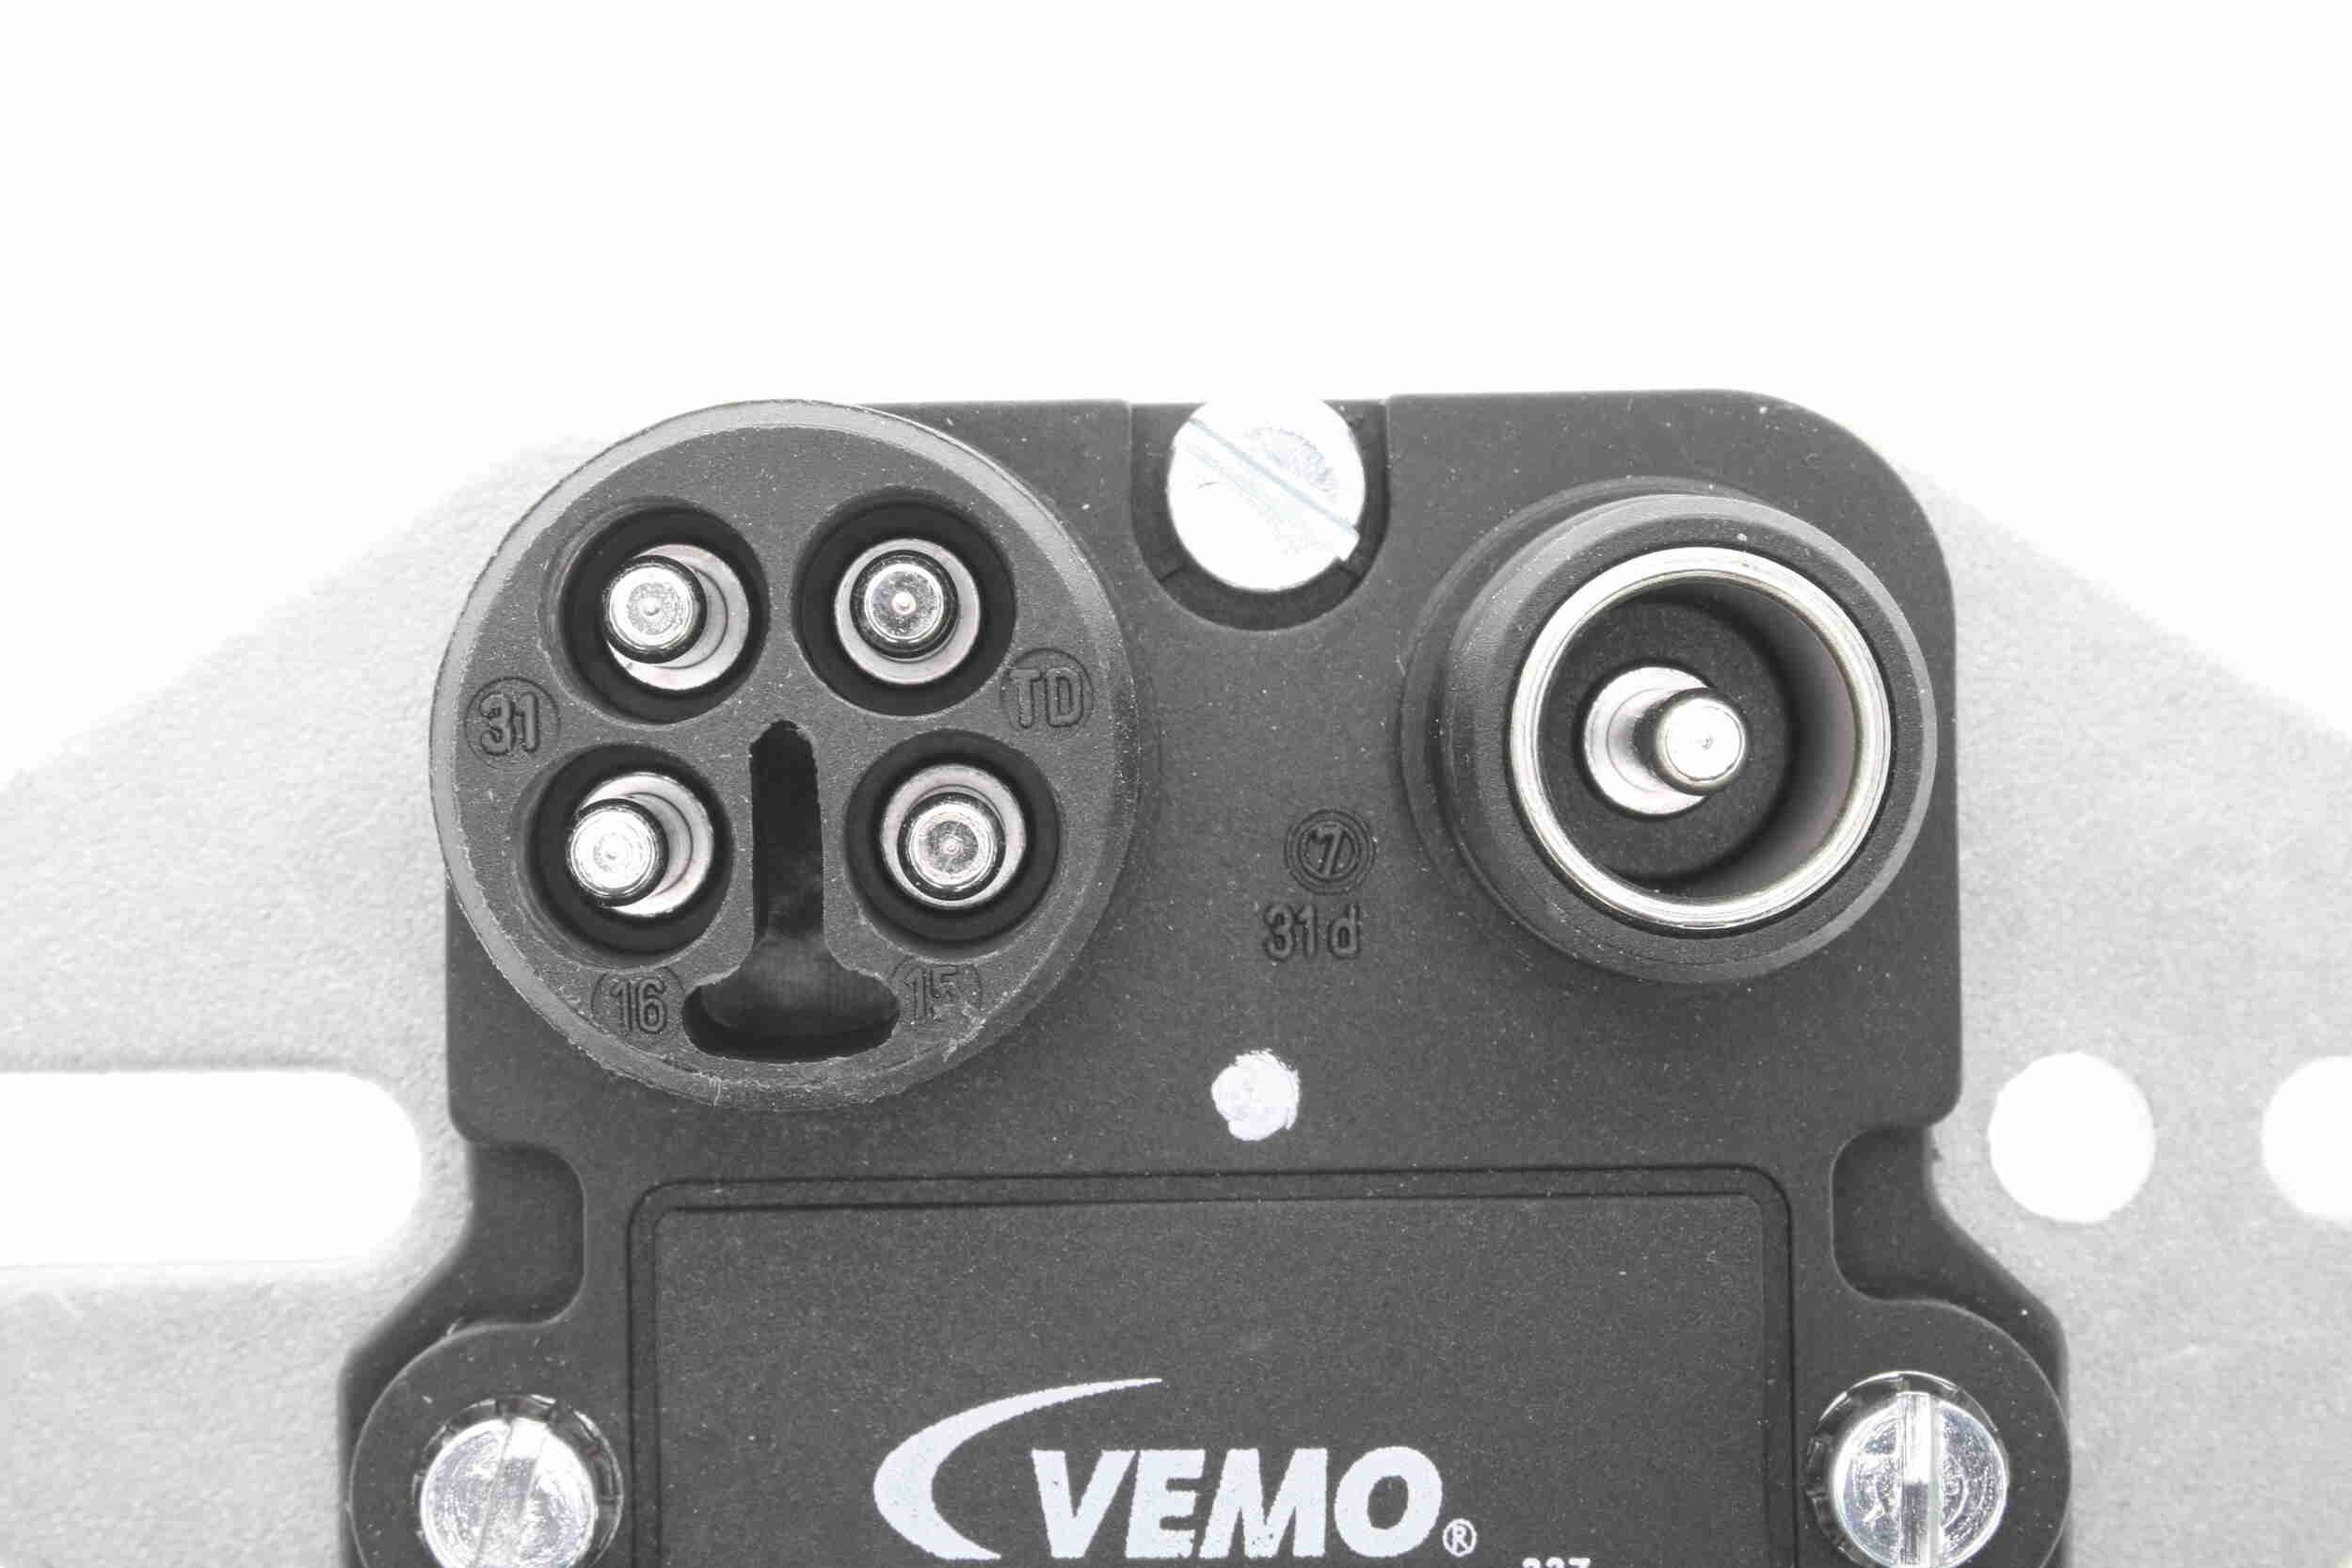 V30700003 Ignition module VEMO V30-70-0003 review and test